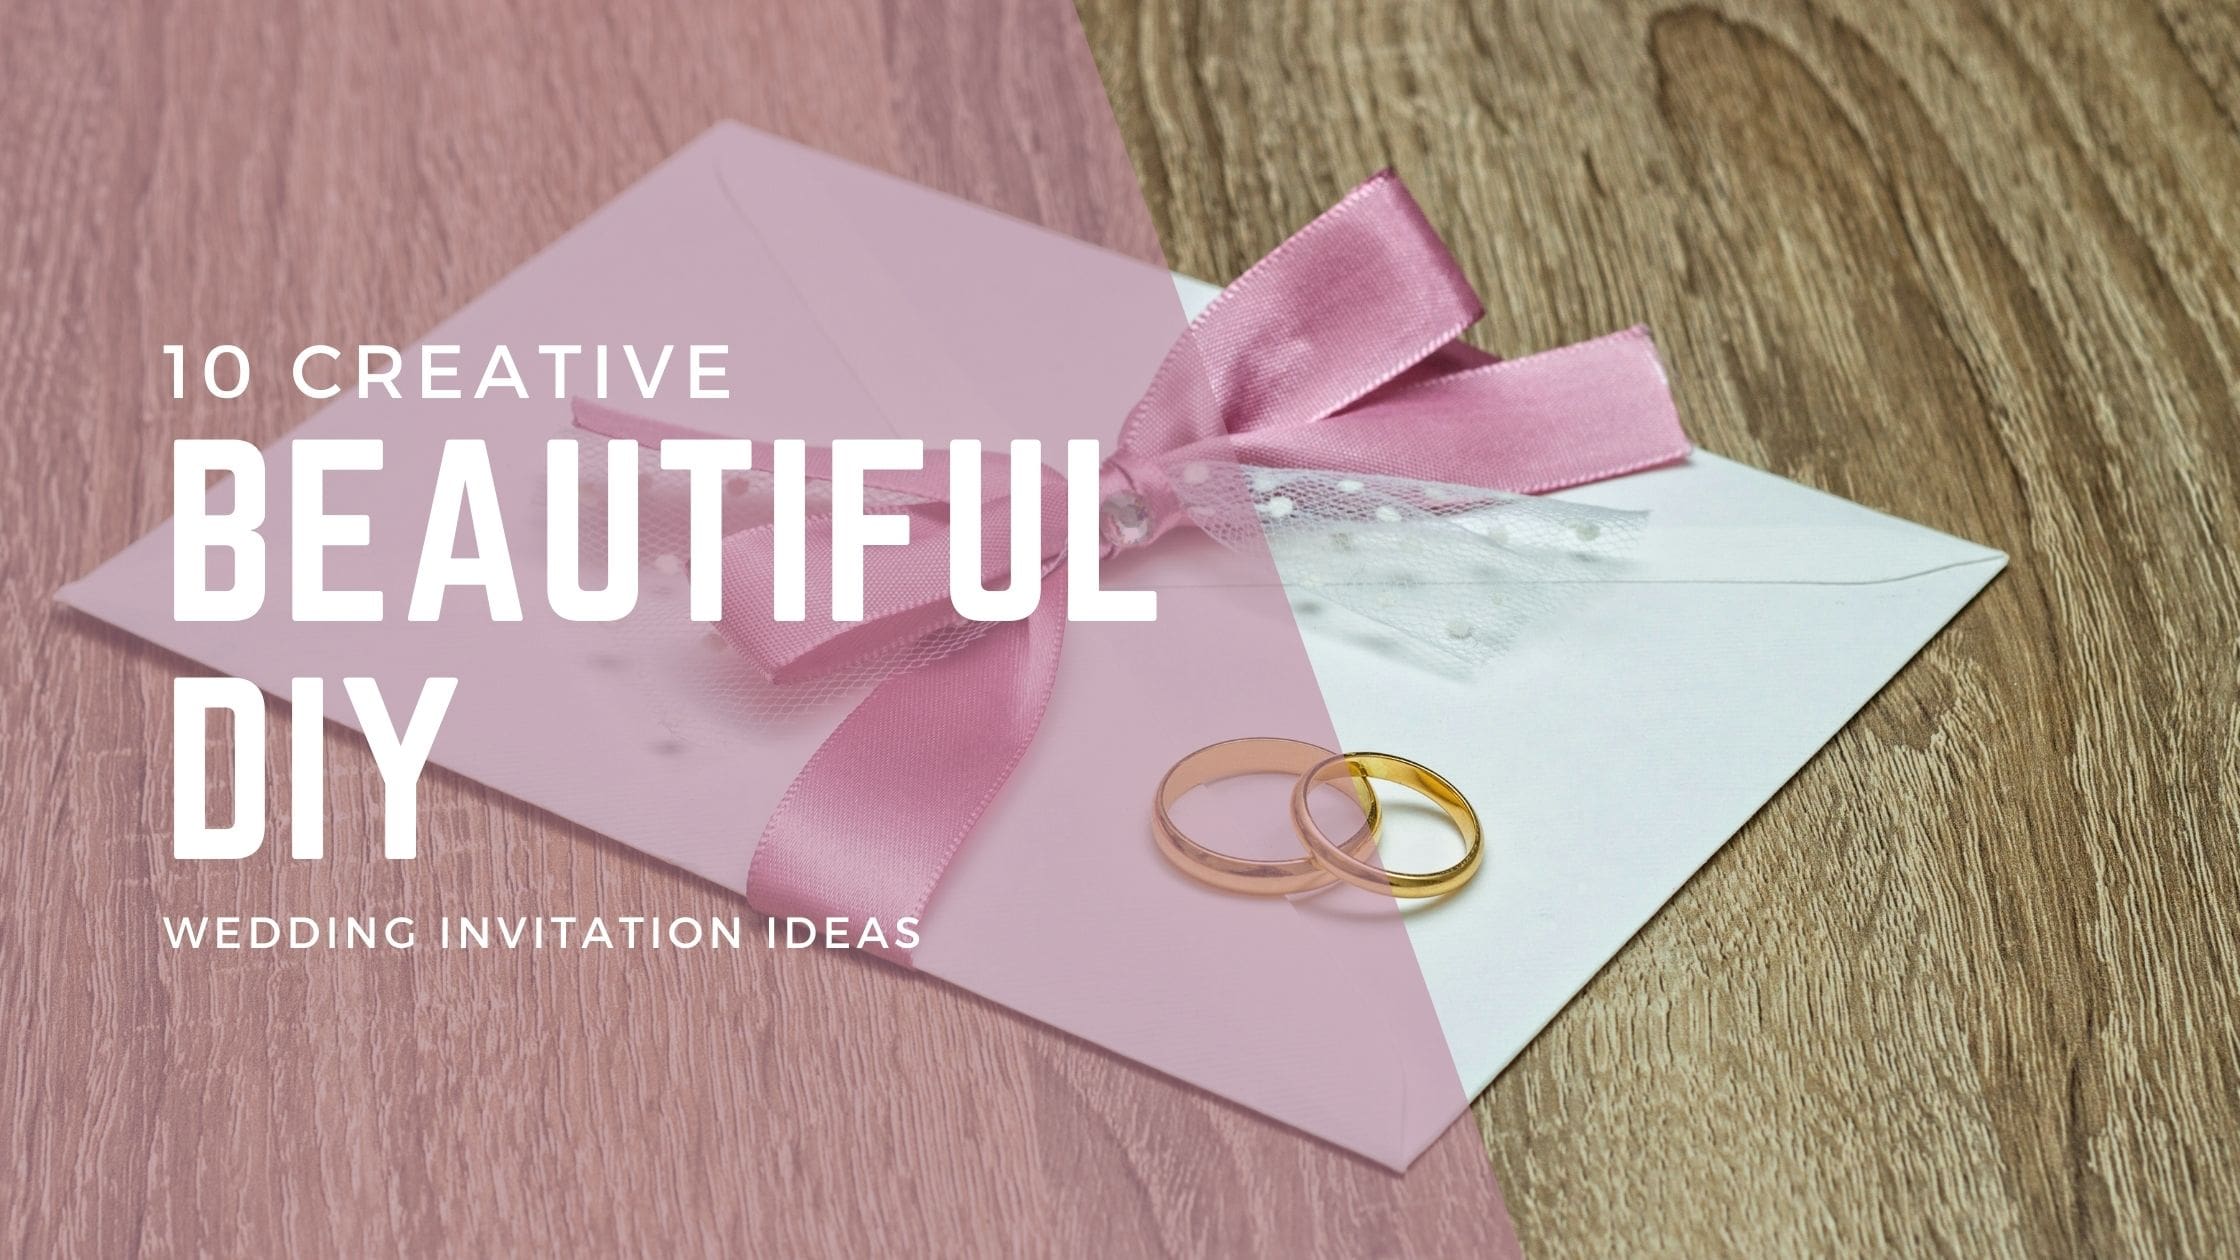 10 Creative and Beautiful DIY Wedding Invitation Ideas Blog Header